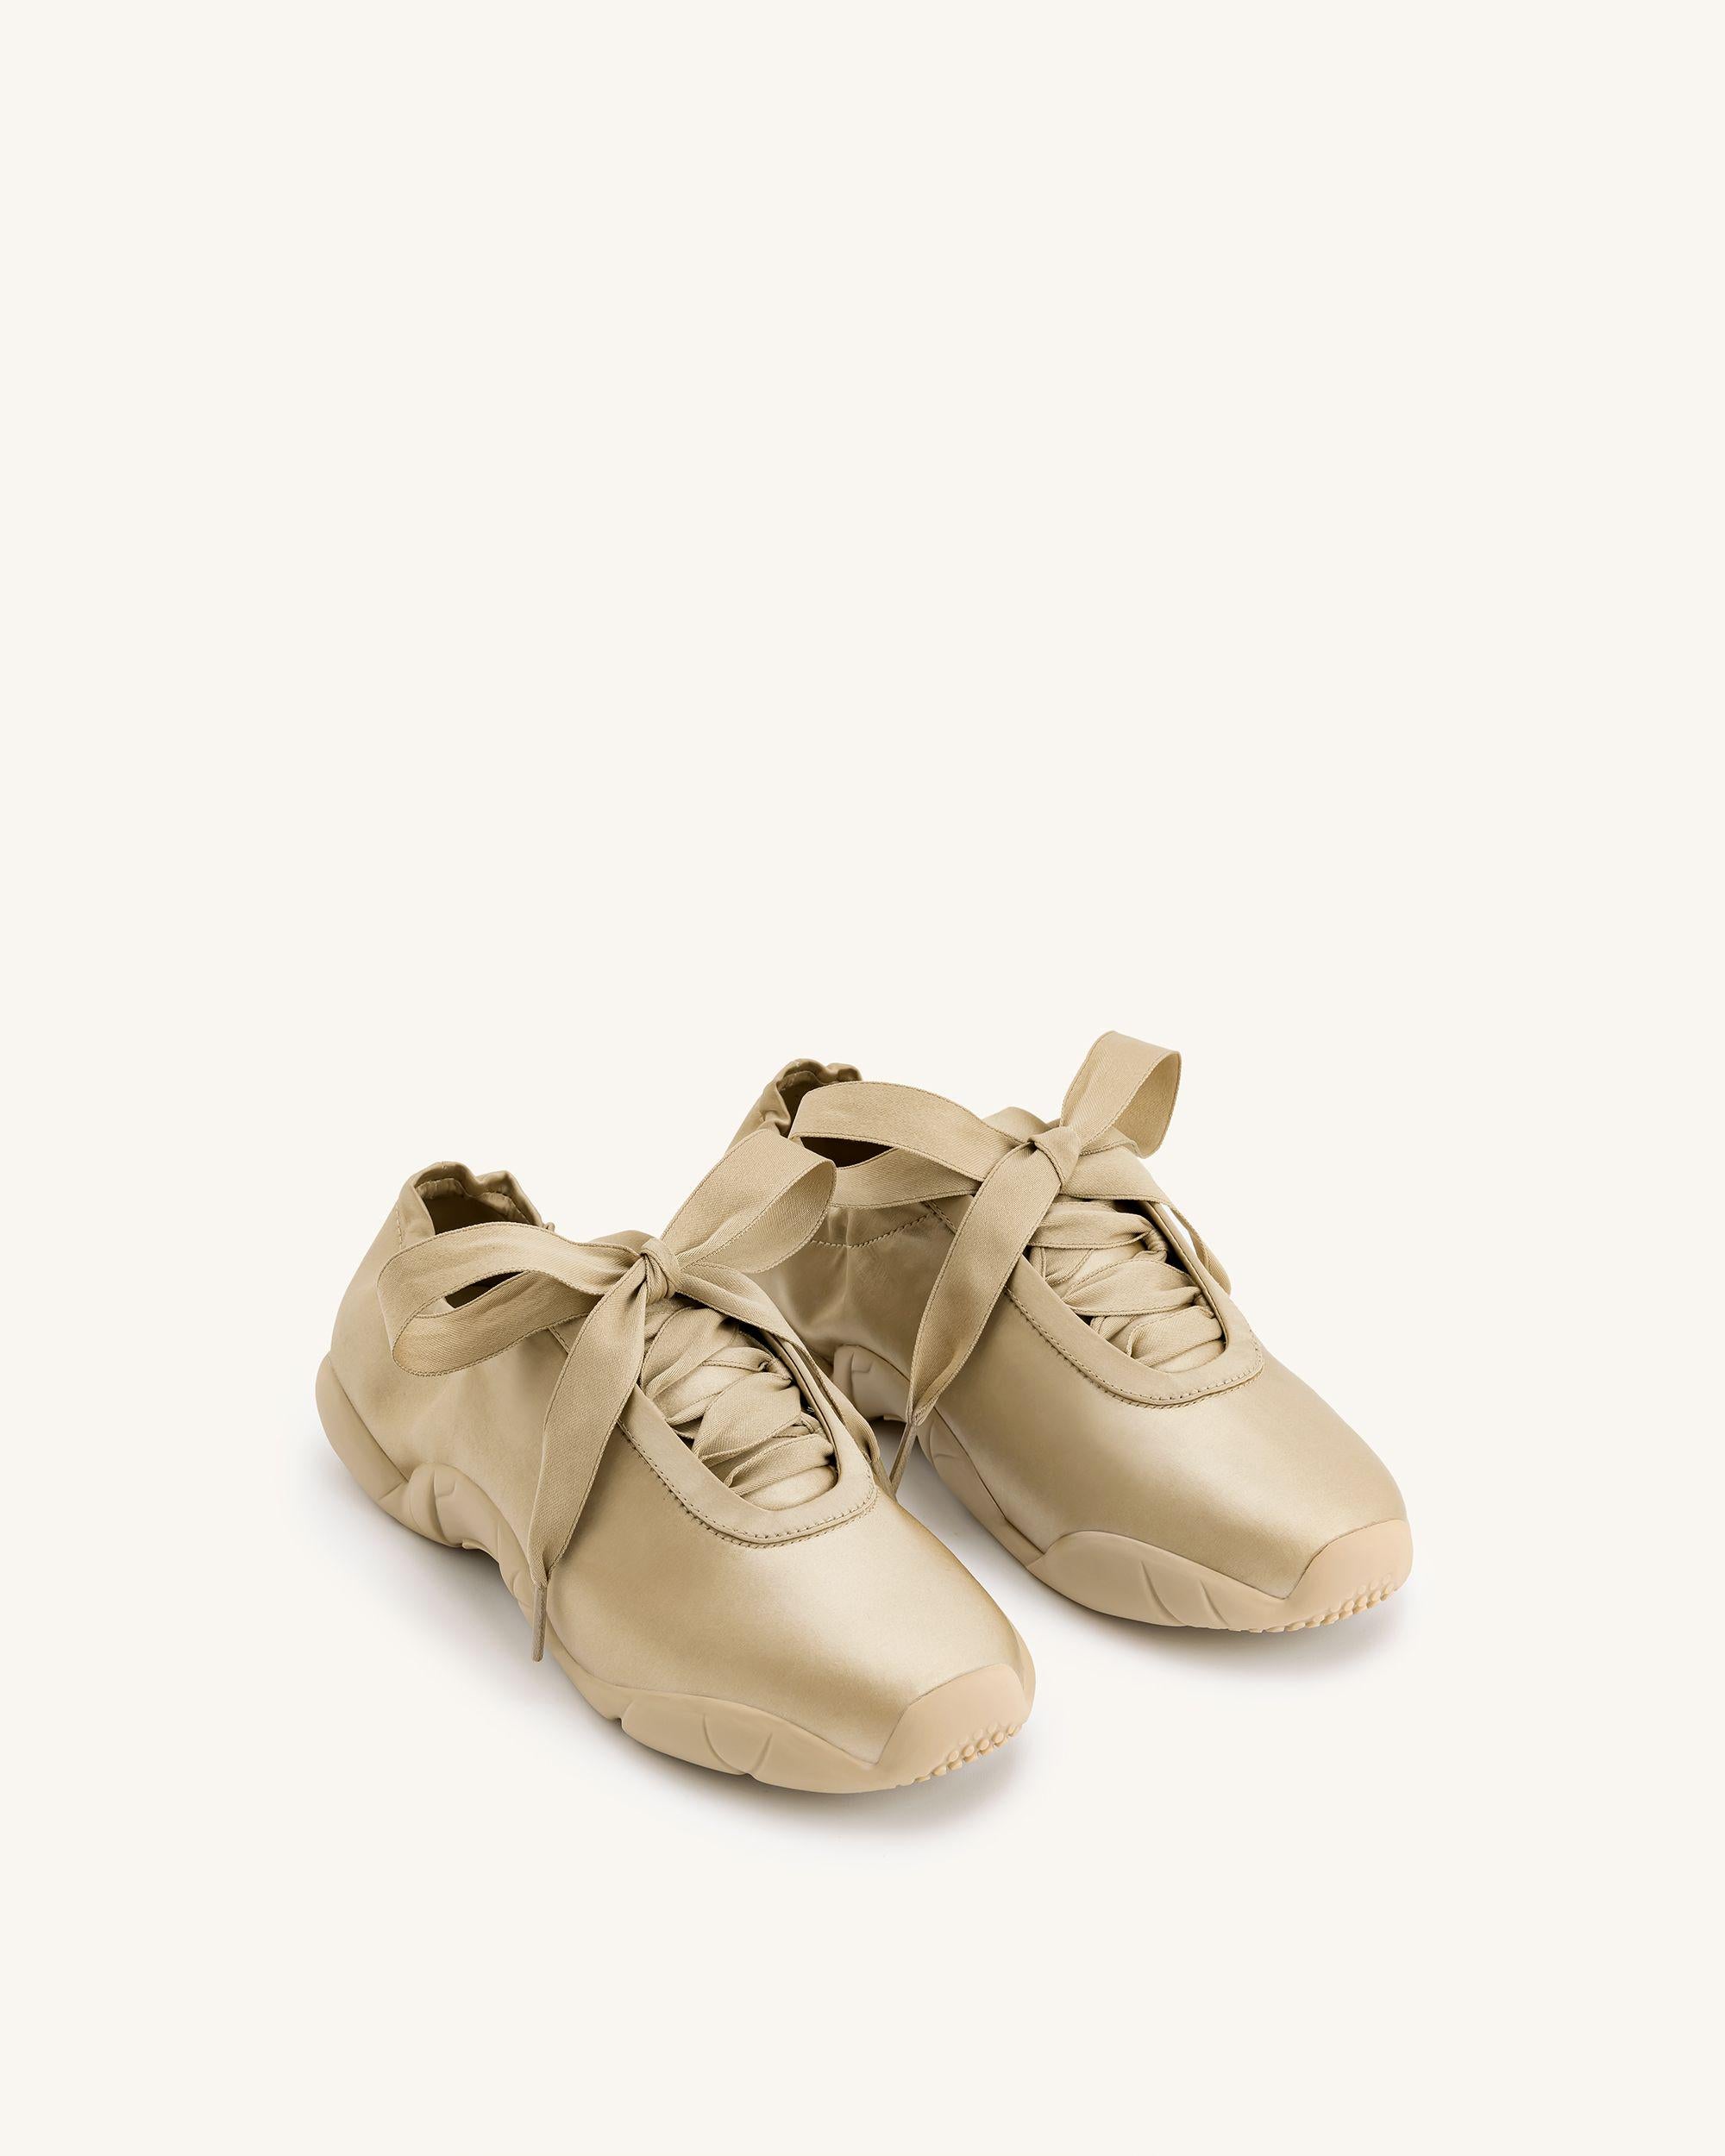 Flavia 芭蕾舞鞋 - 棕色